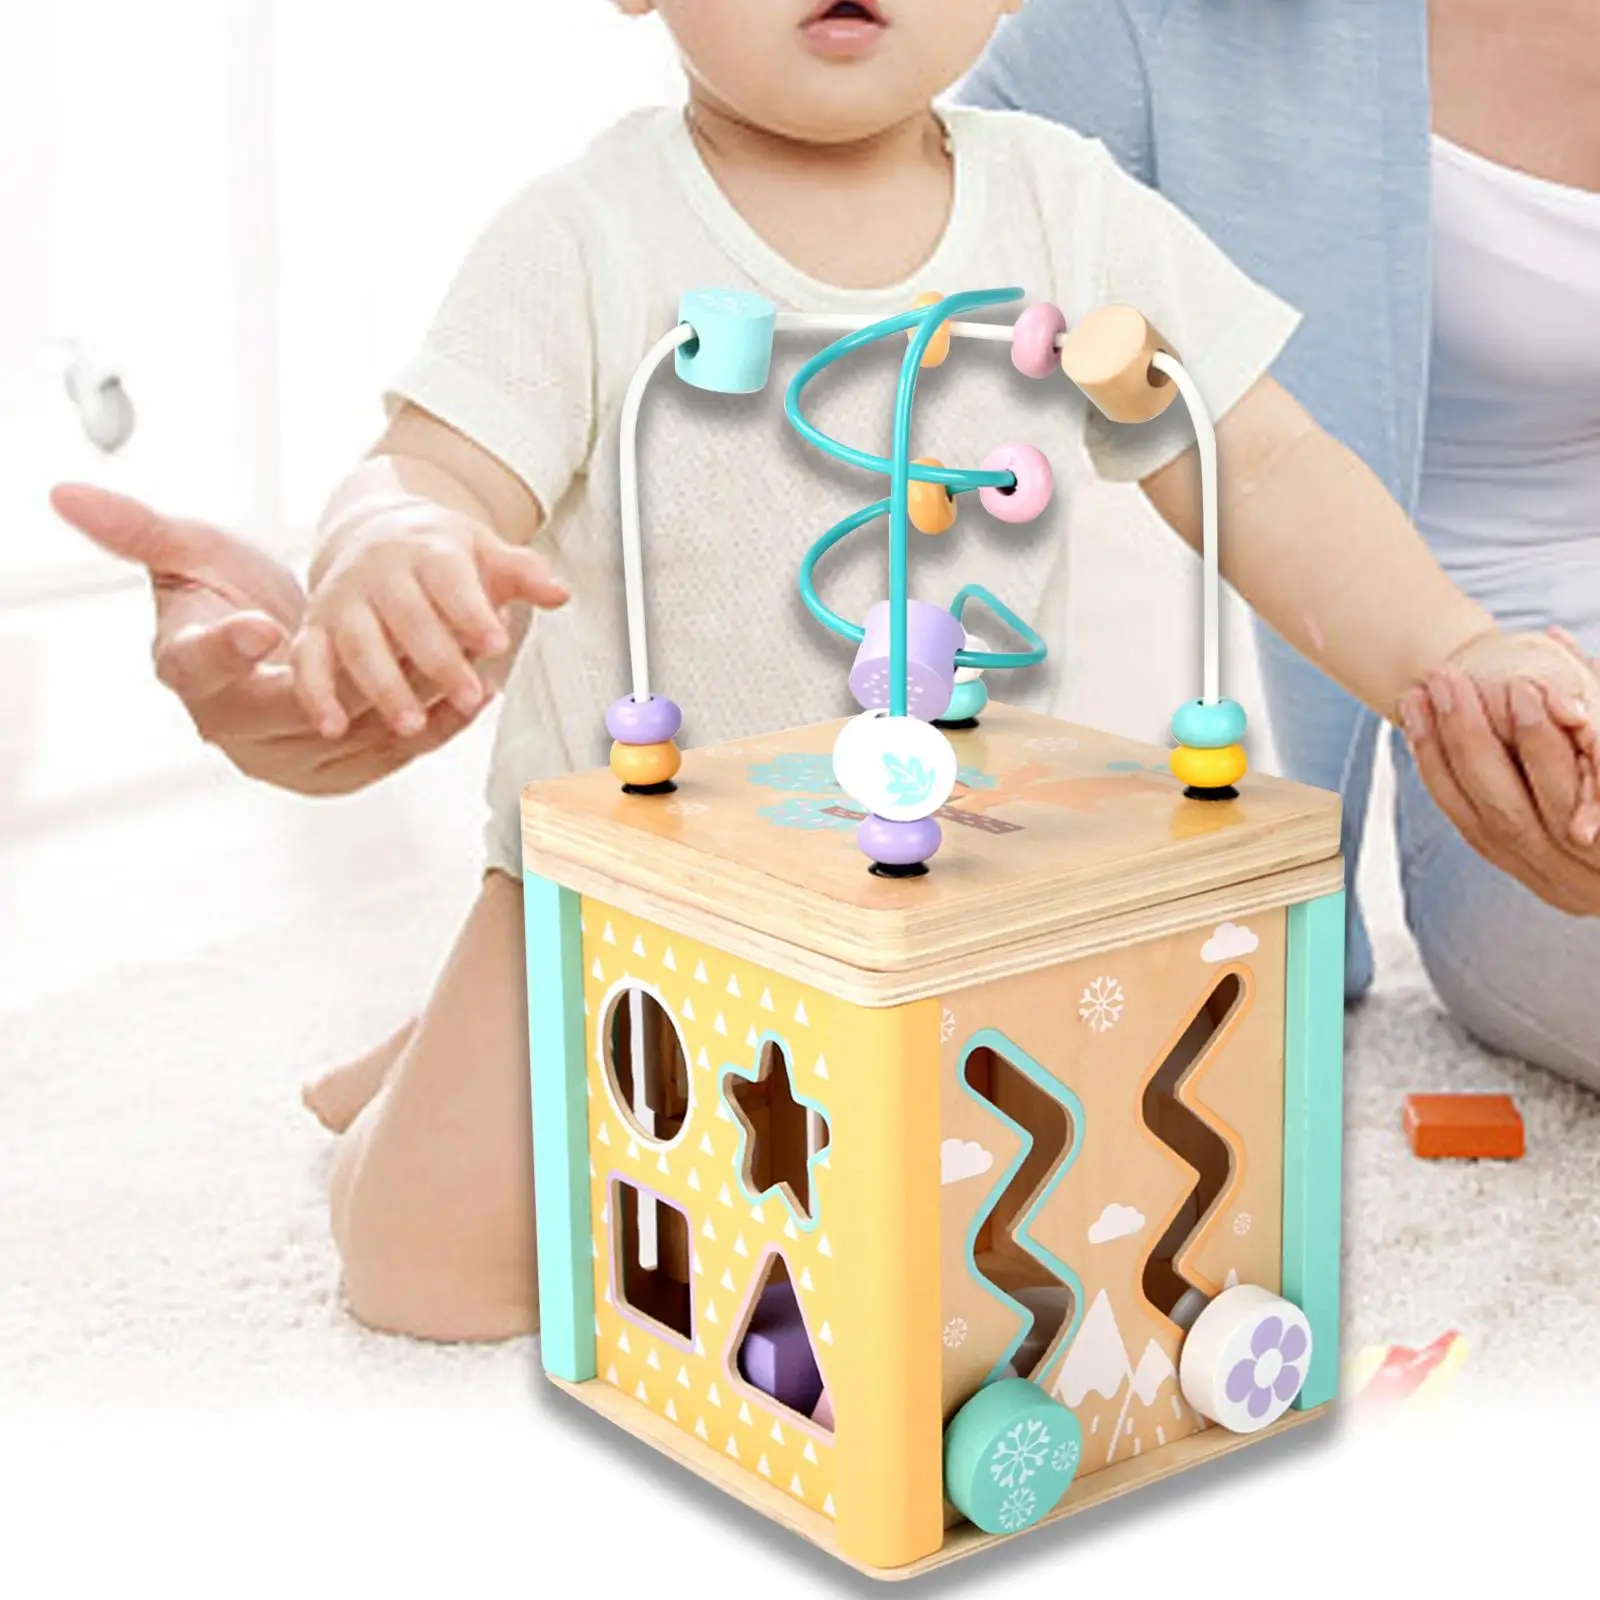 Classic Bead Maze with Bead Maze Matching Logical Game Bead Maze for Preschool Children